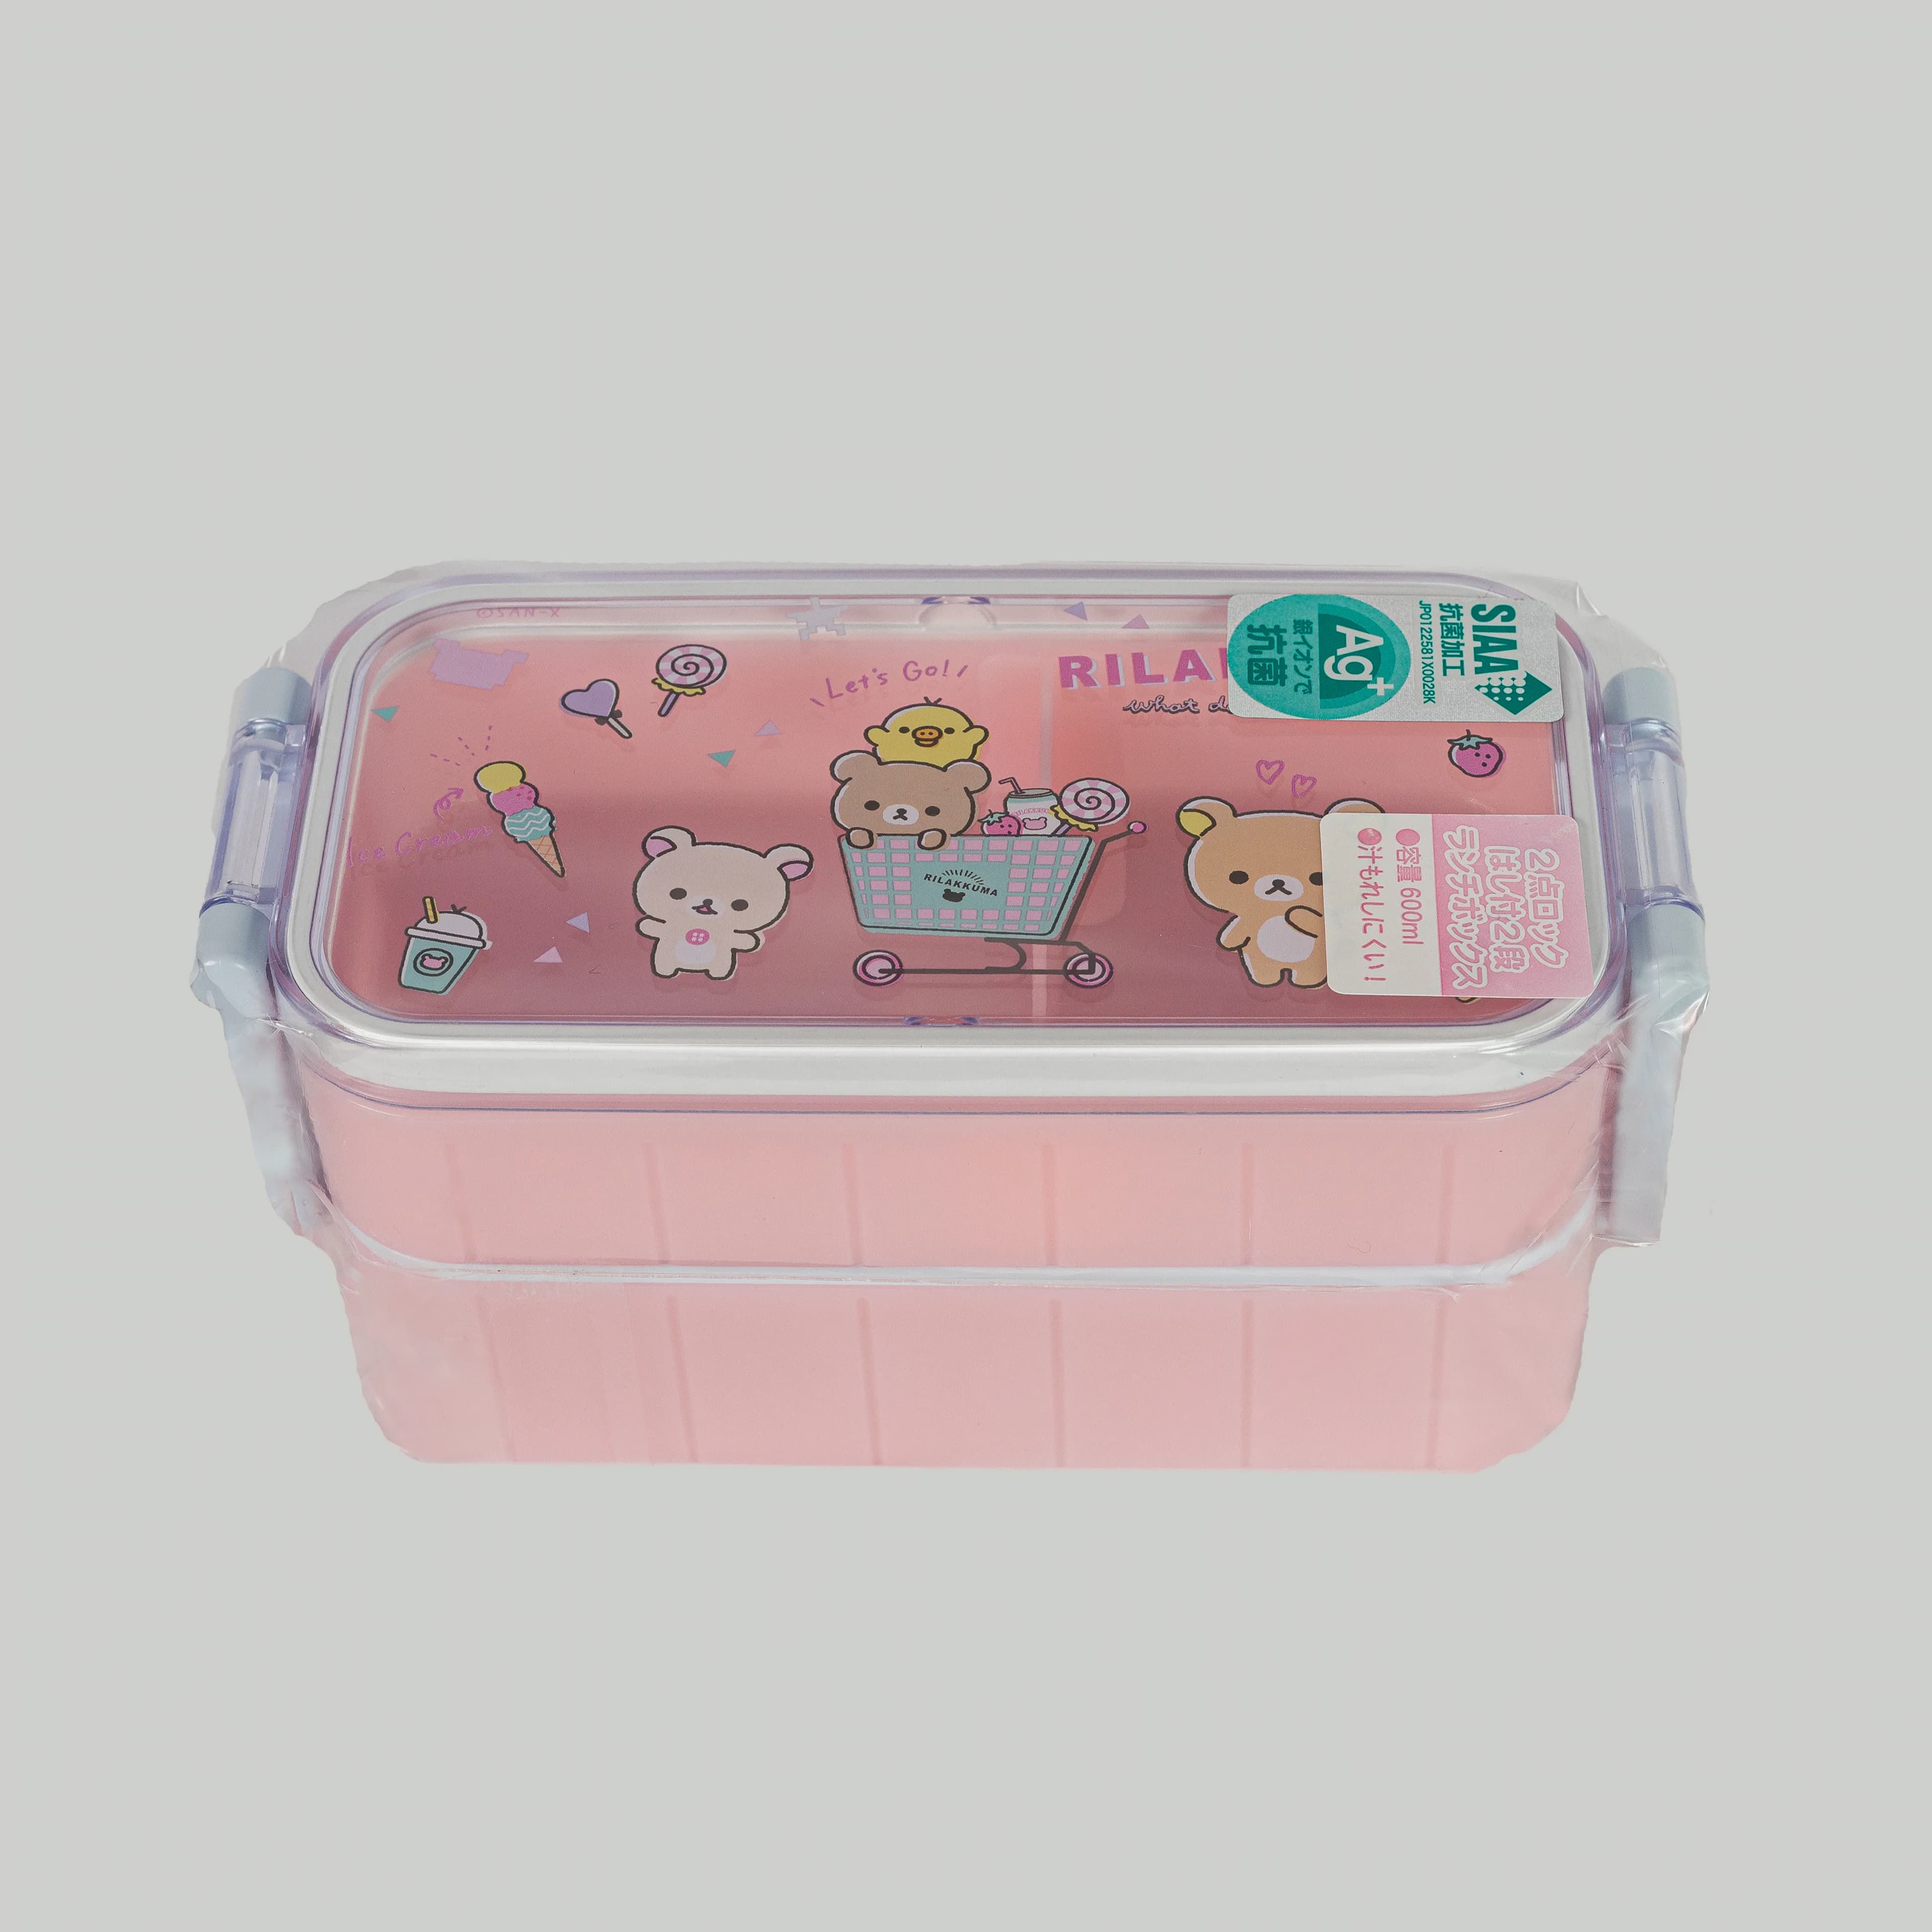 San-x Rilakkuma 2-Layer Bento Lunch Box - Pink 